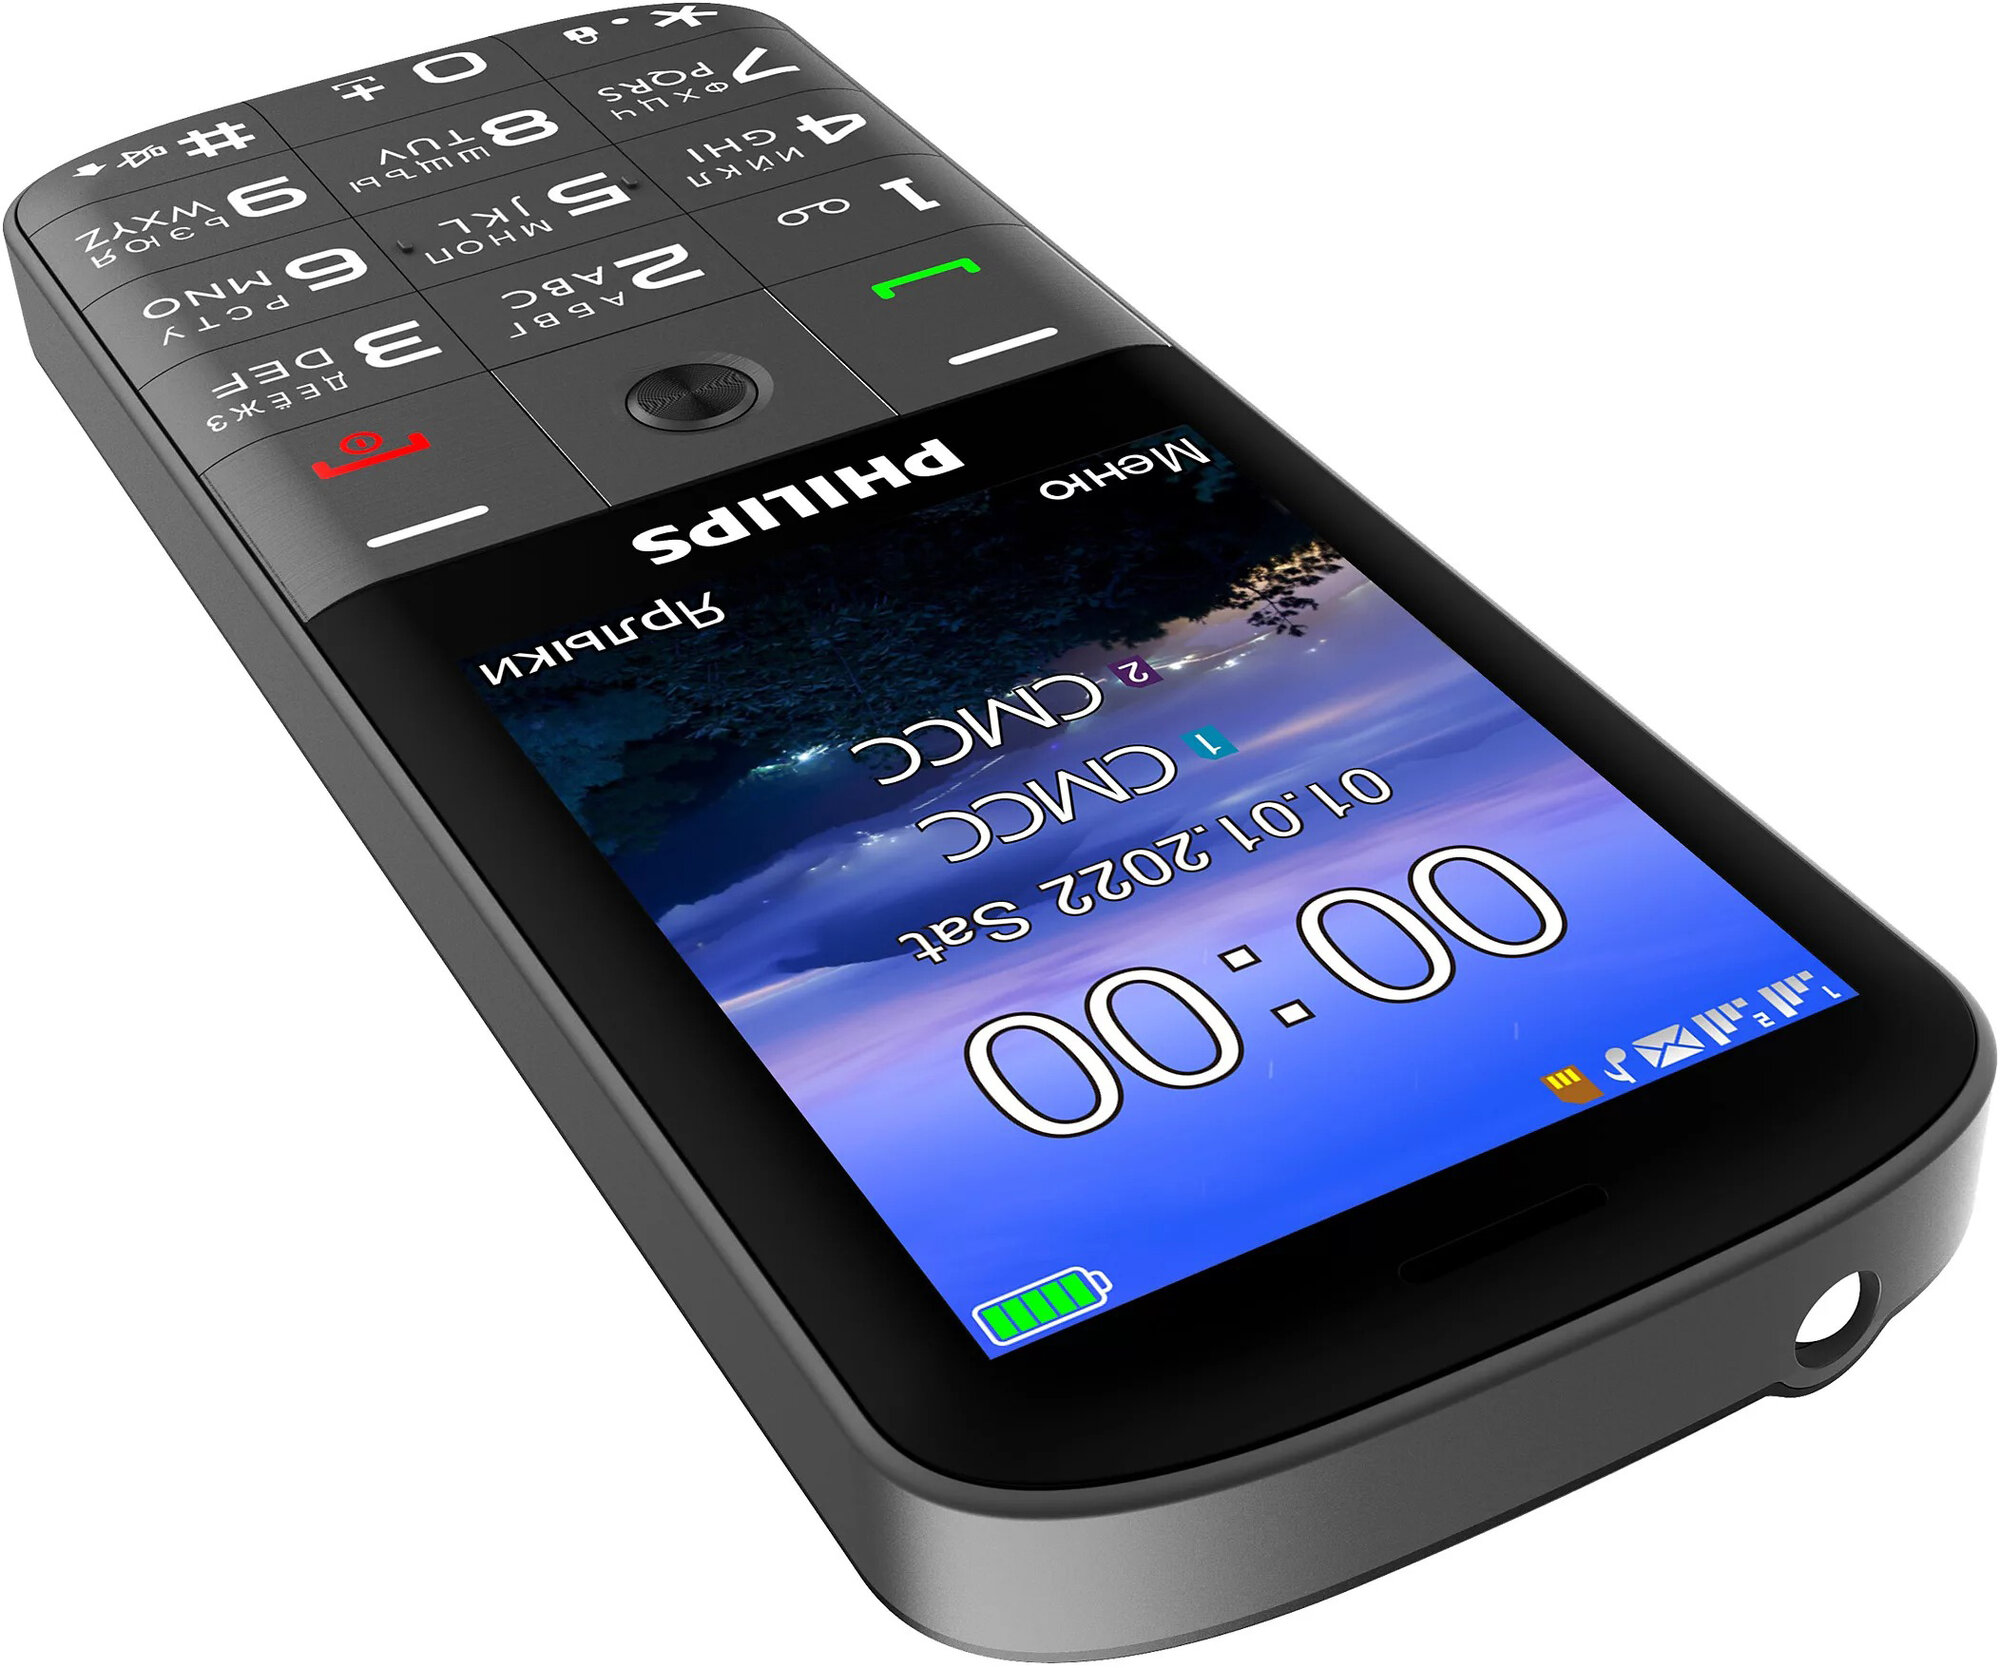 Телефон Philips Xenium E227, Dual nano SIM, темно-серый